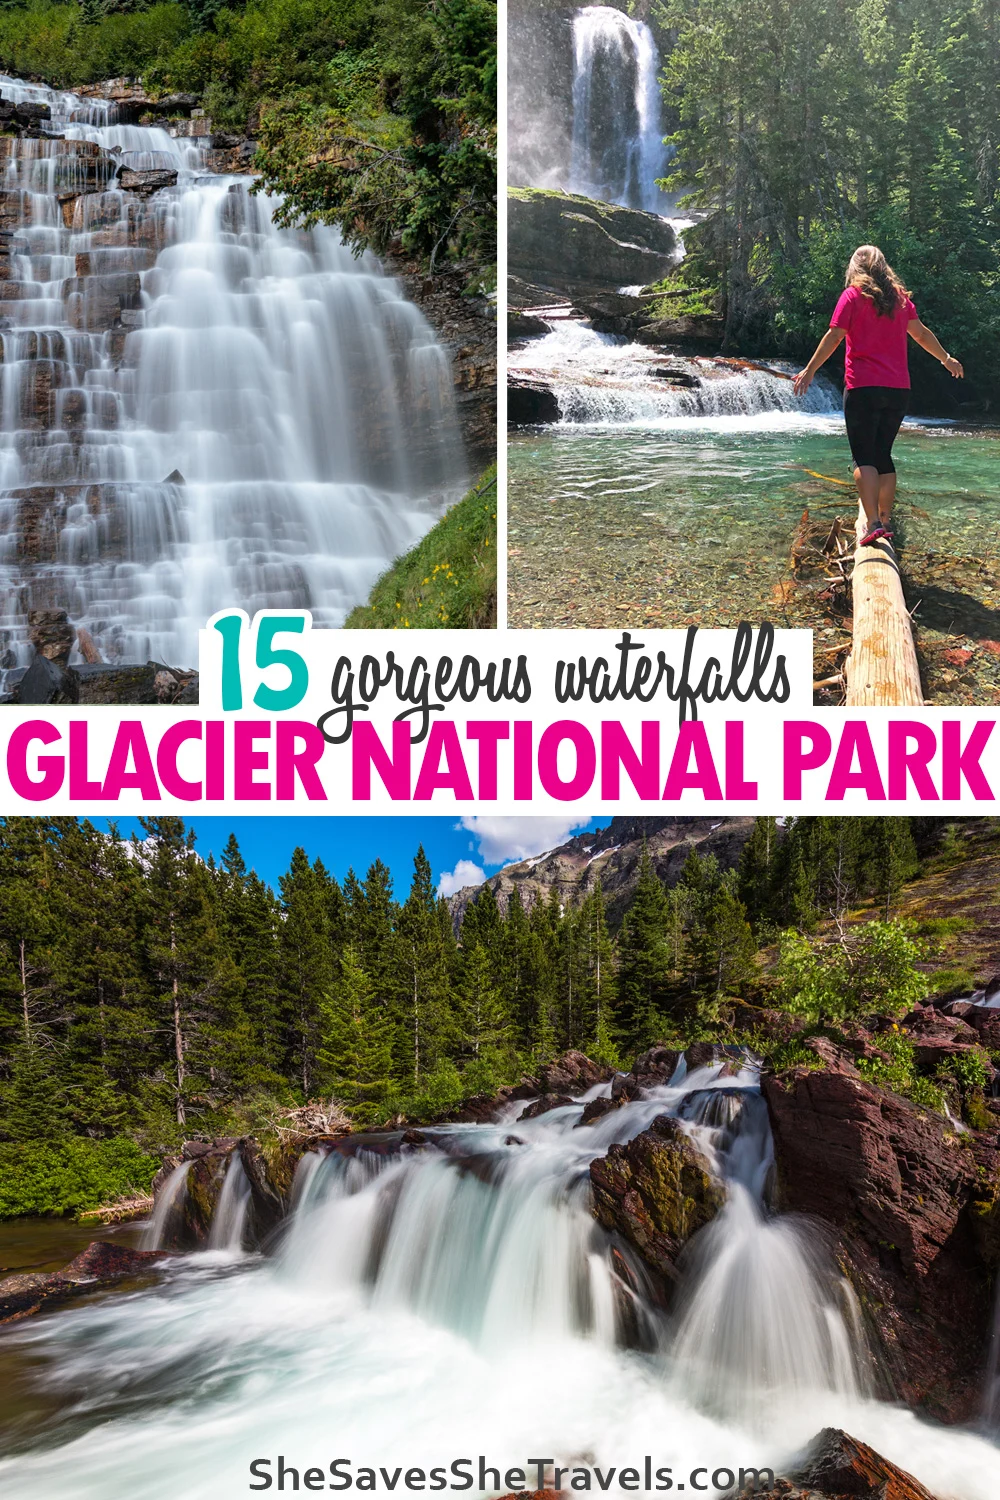 15 gorgeous waterfalls glacier national park